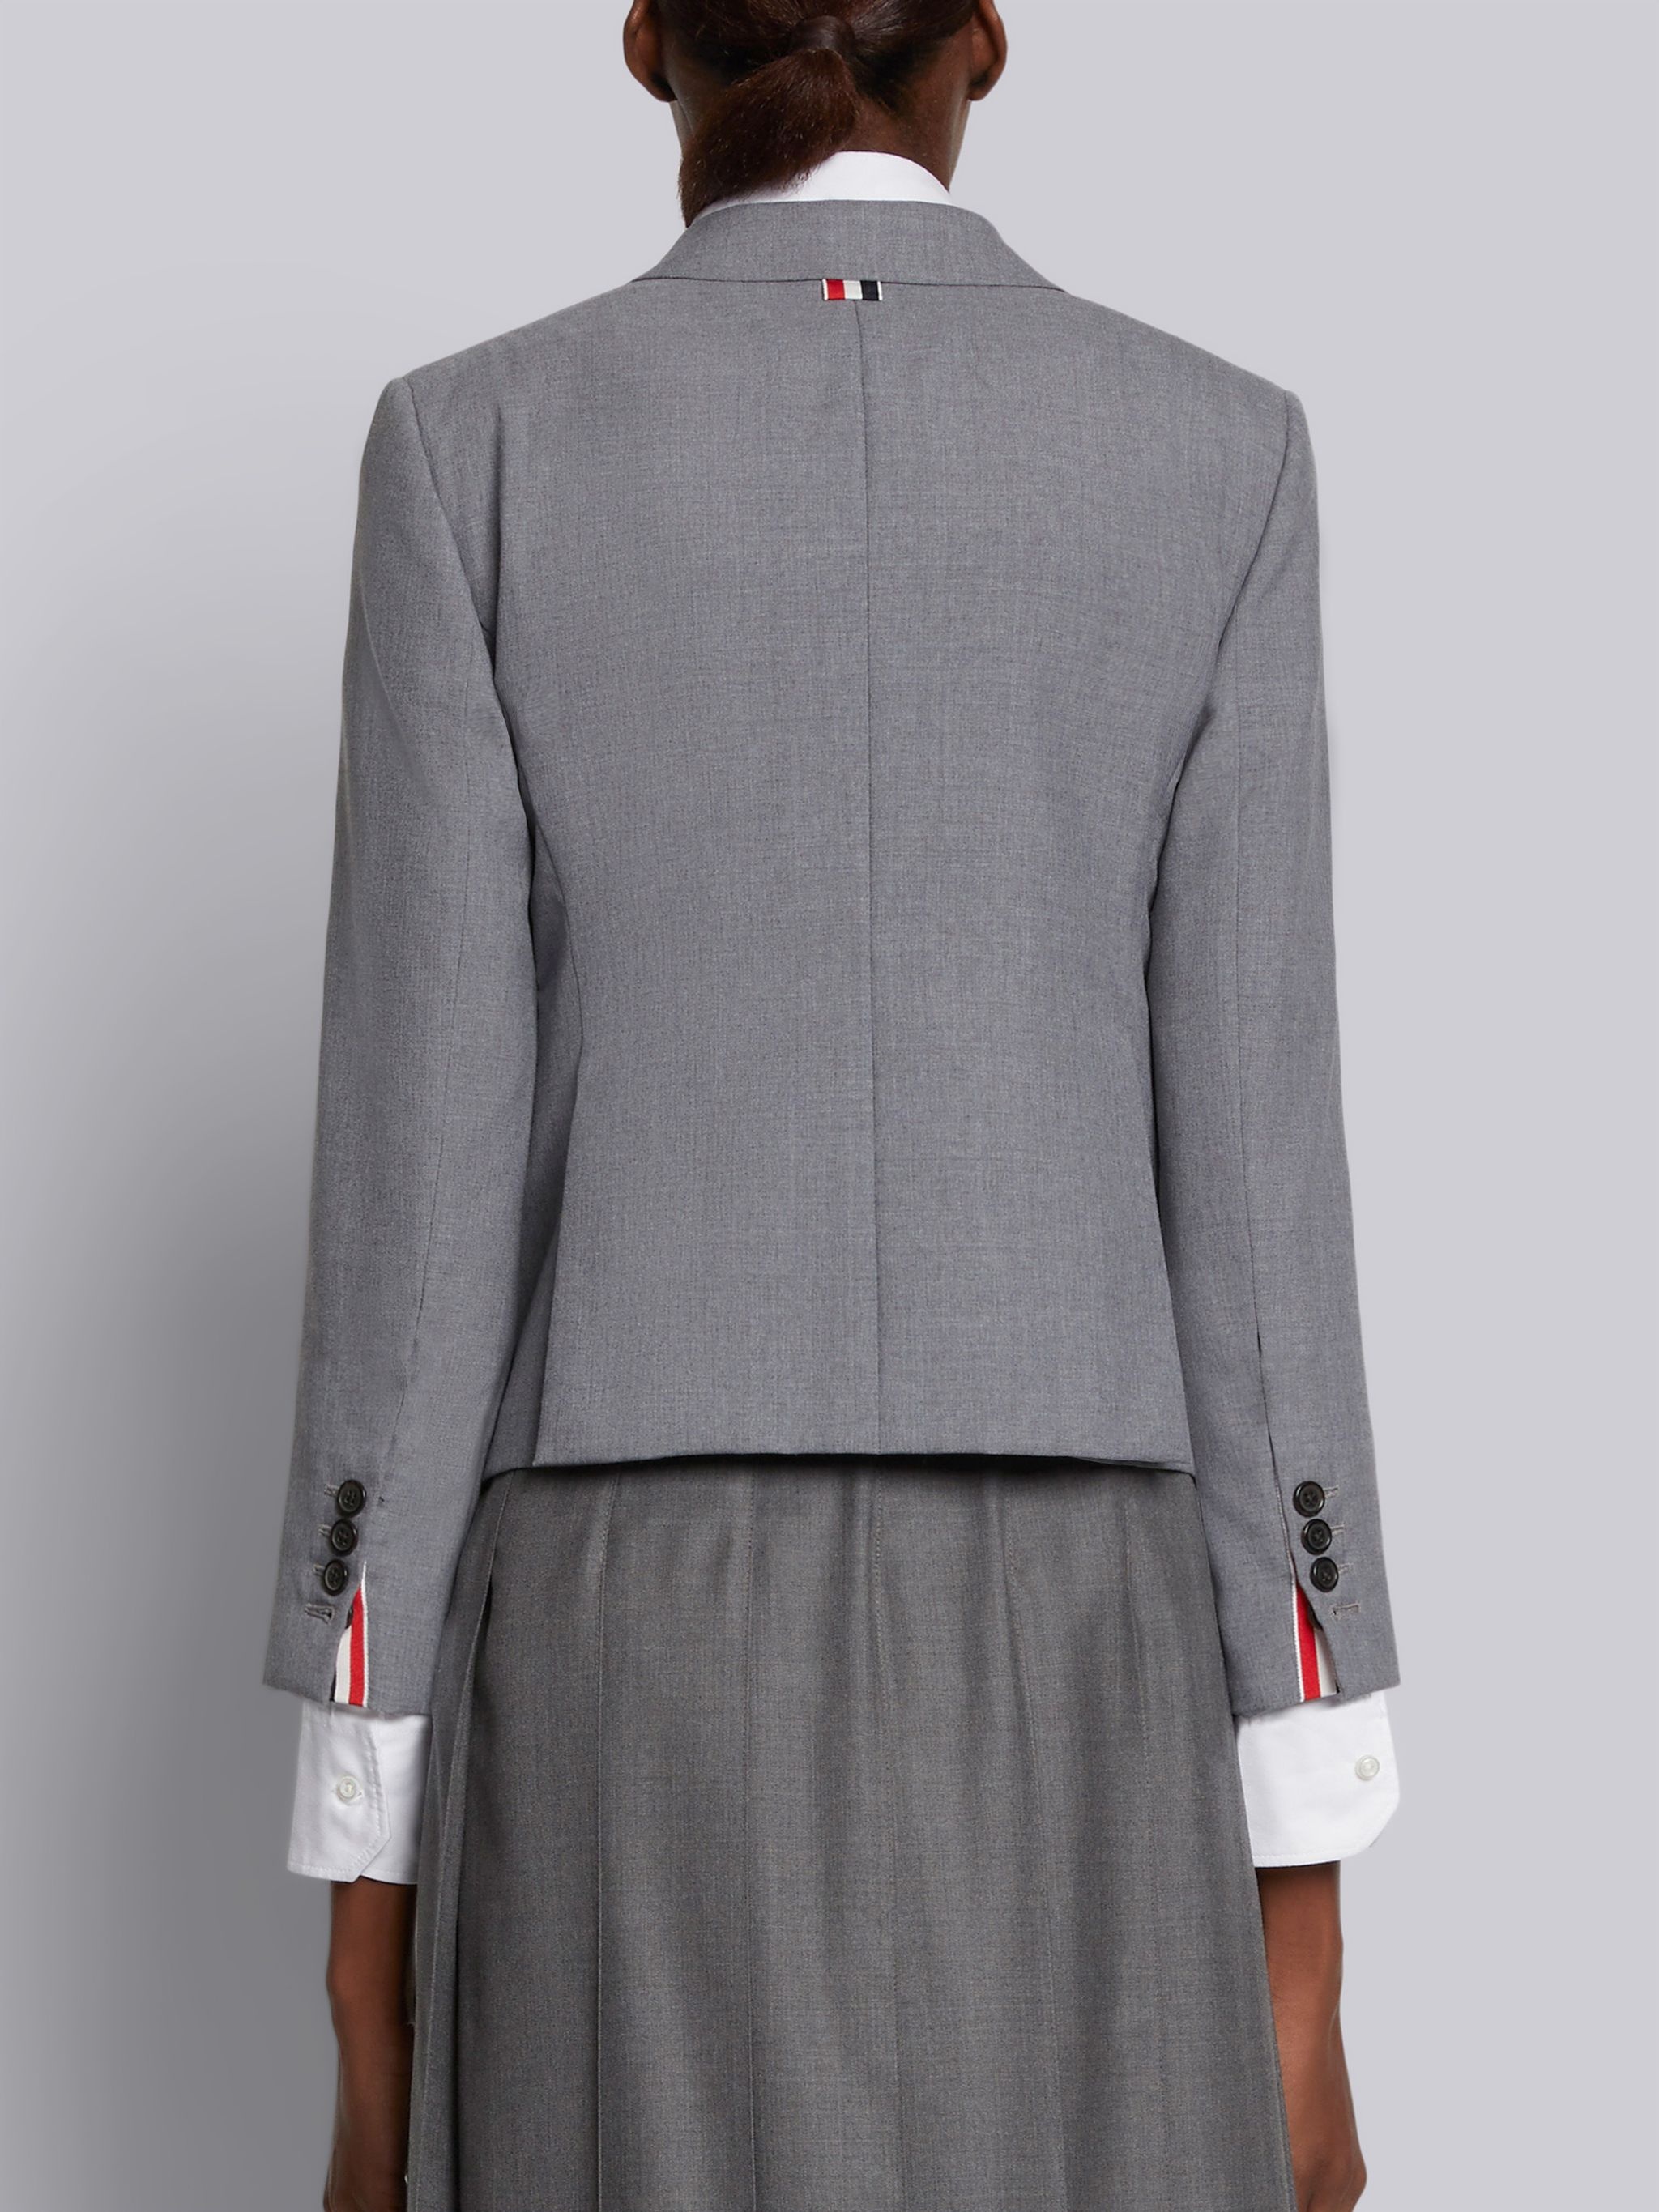 Medium Grey School Uniform Plain Weave High Armhole Single Breasted Sport Coat - 3